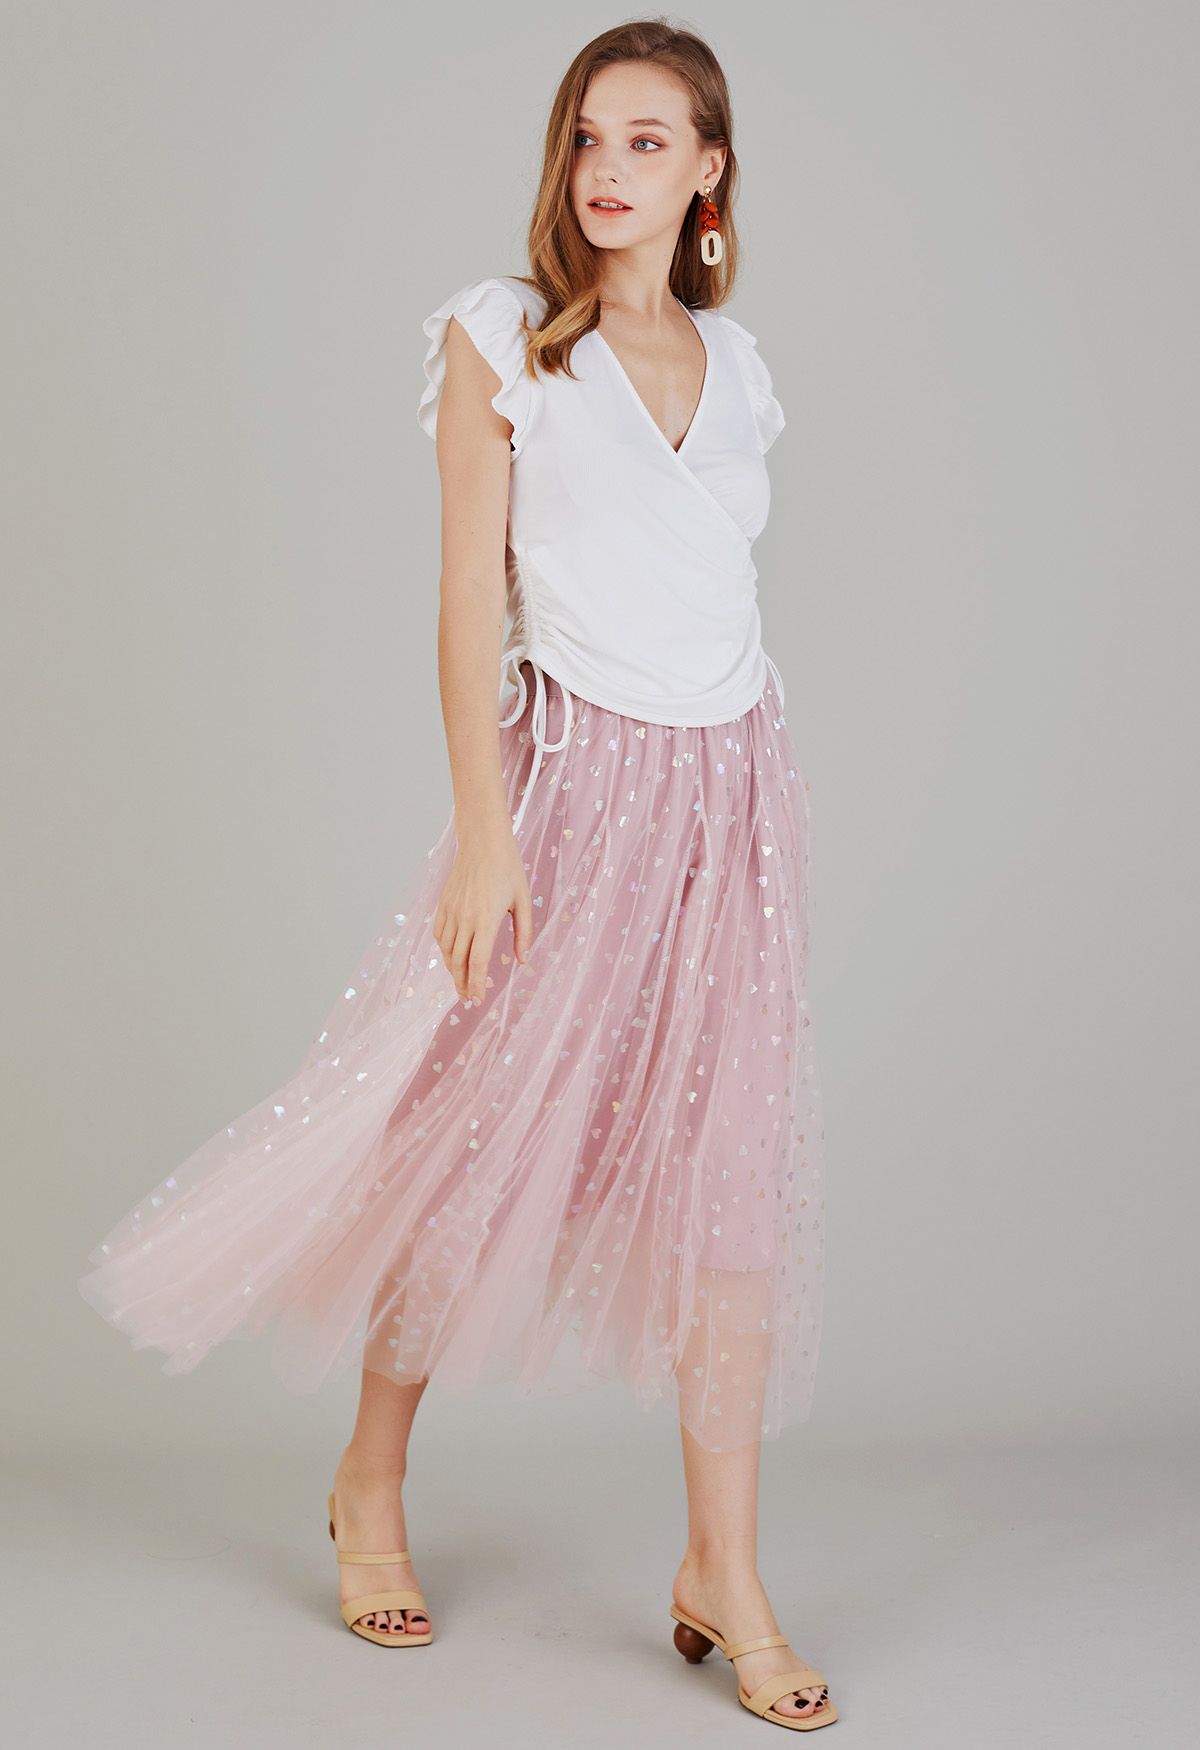 Iridescent Hearts Mesh Tulle Midi Skirt in Pink